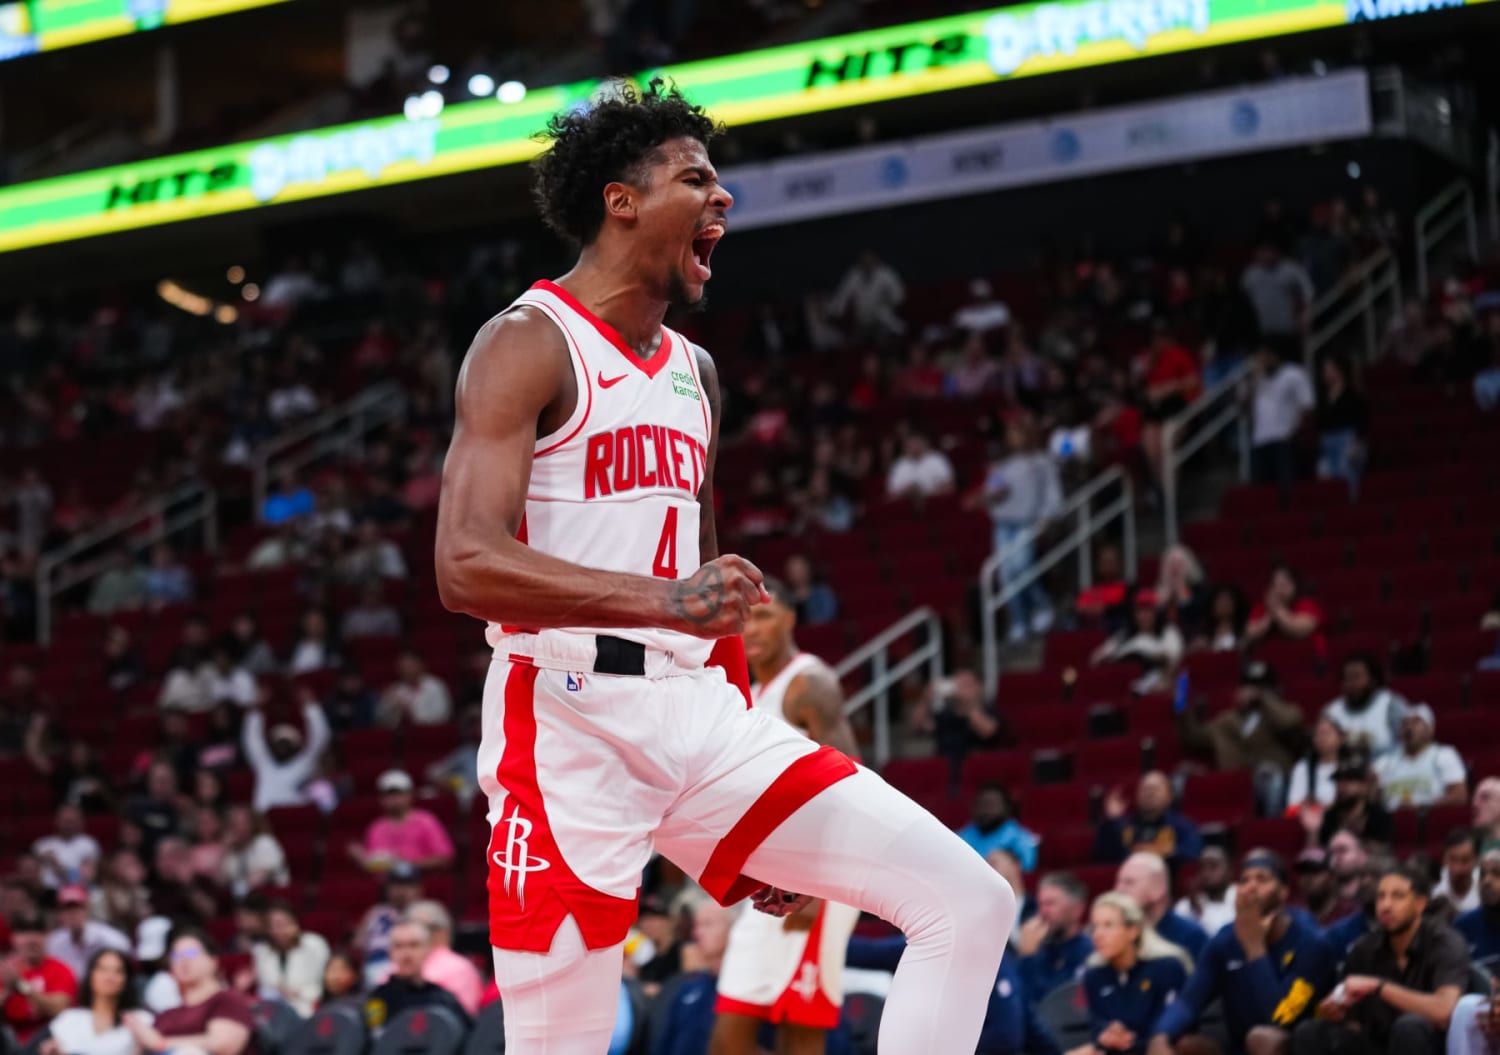 Rockets reveal three new uniforms for 2019-20 season